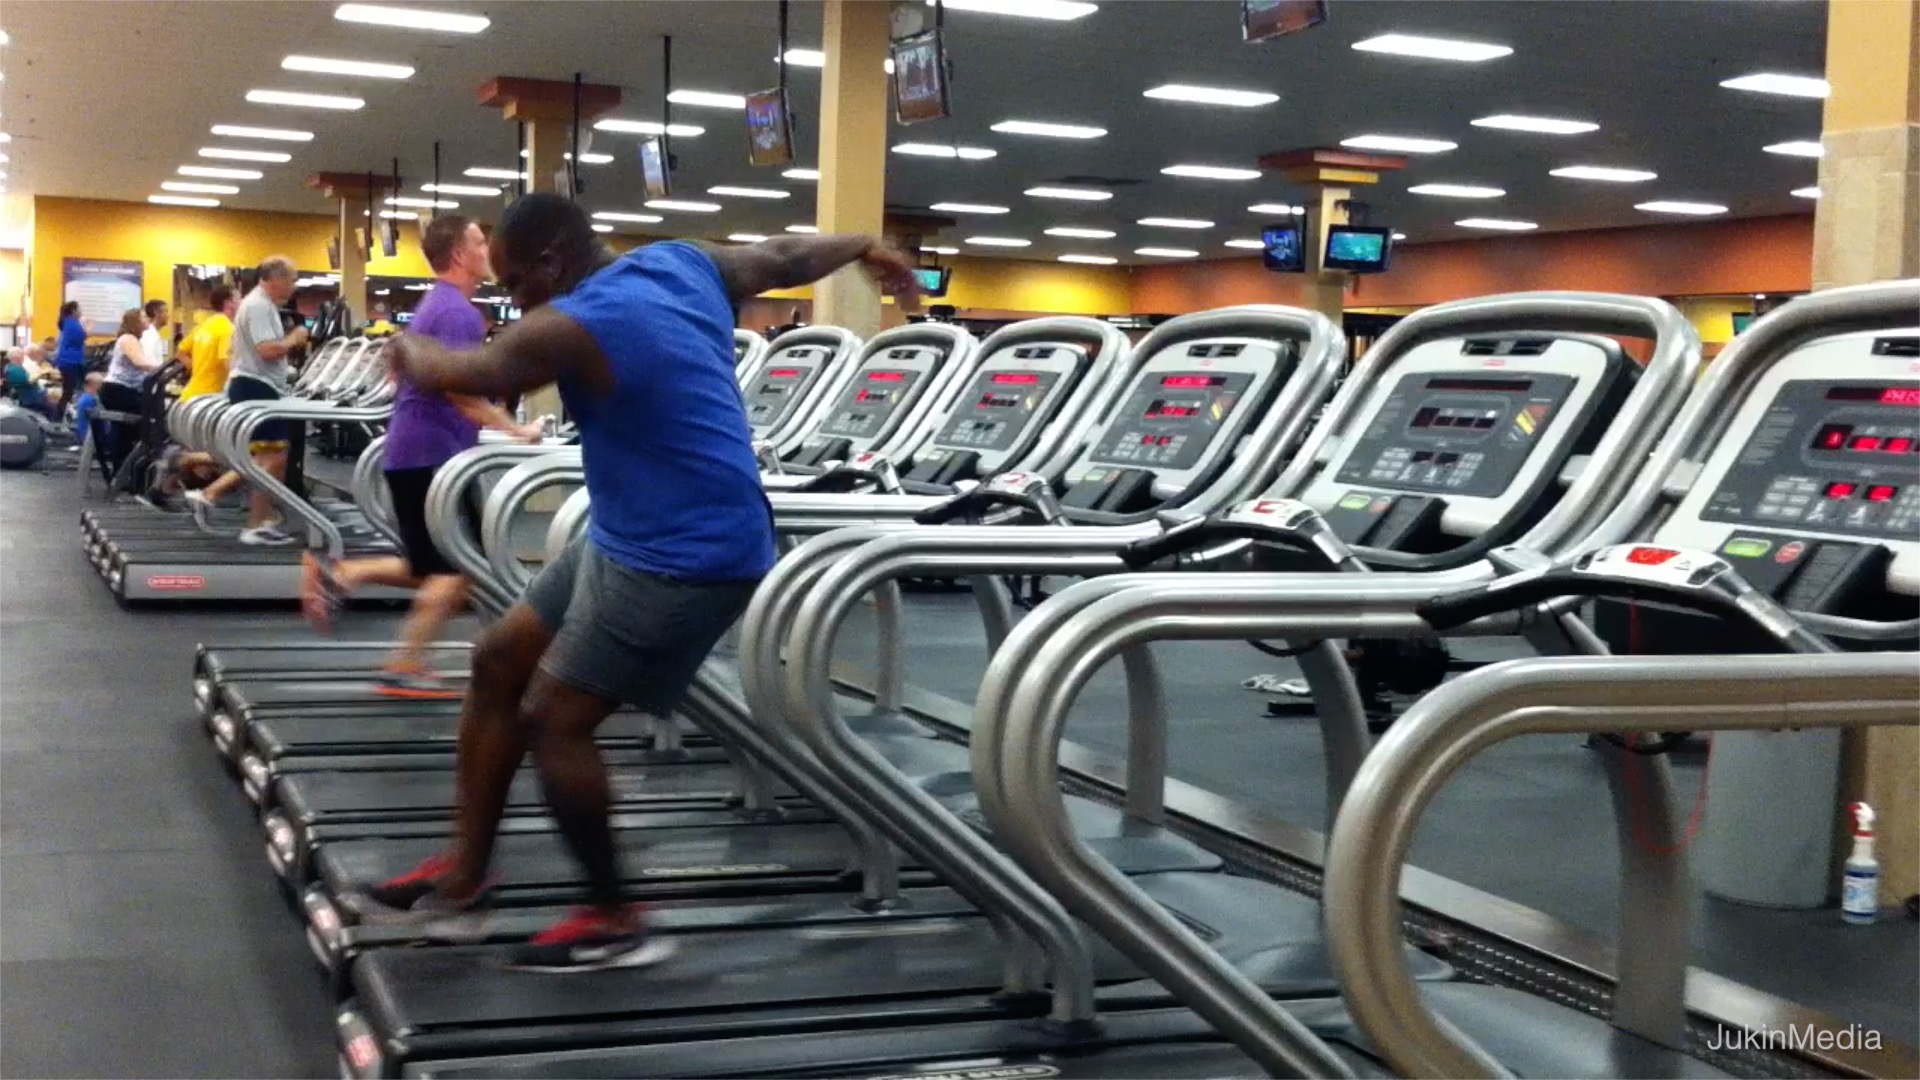 Amazing Treadmill Dance